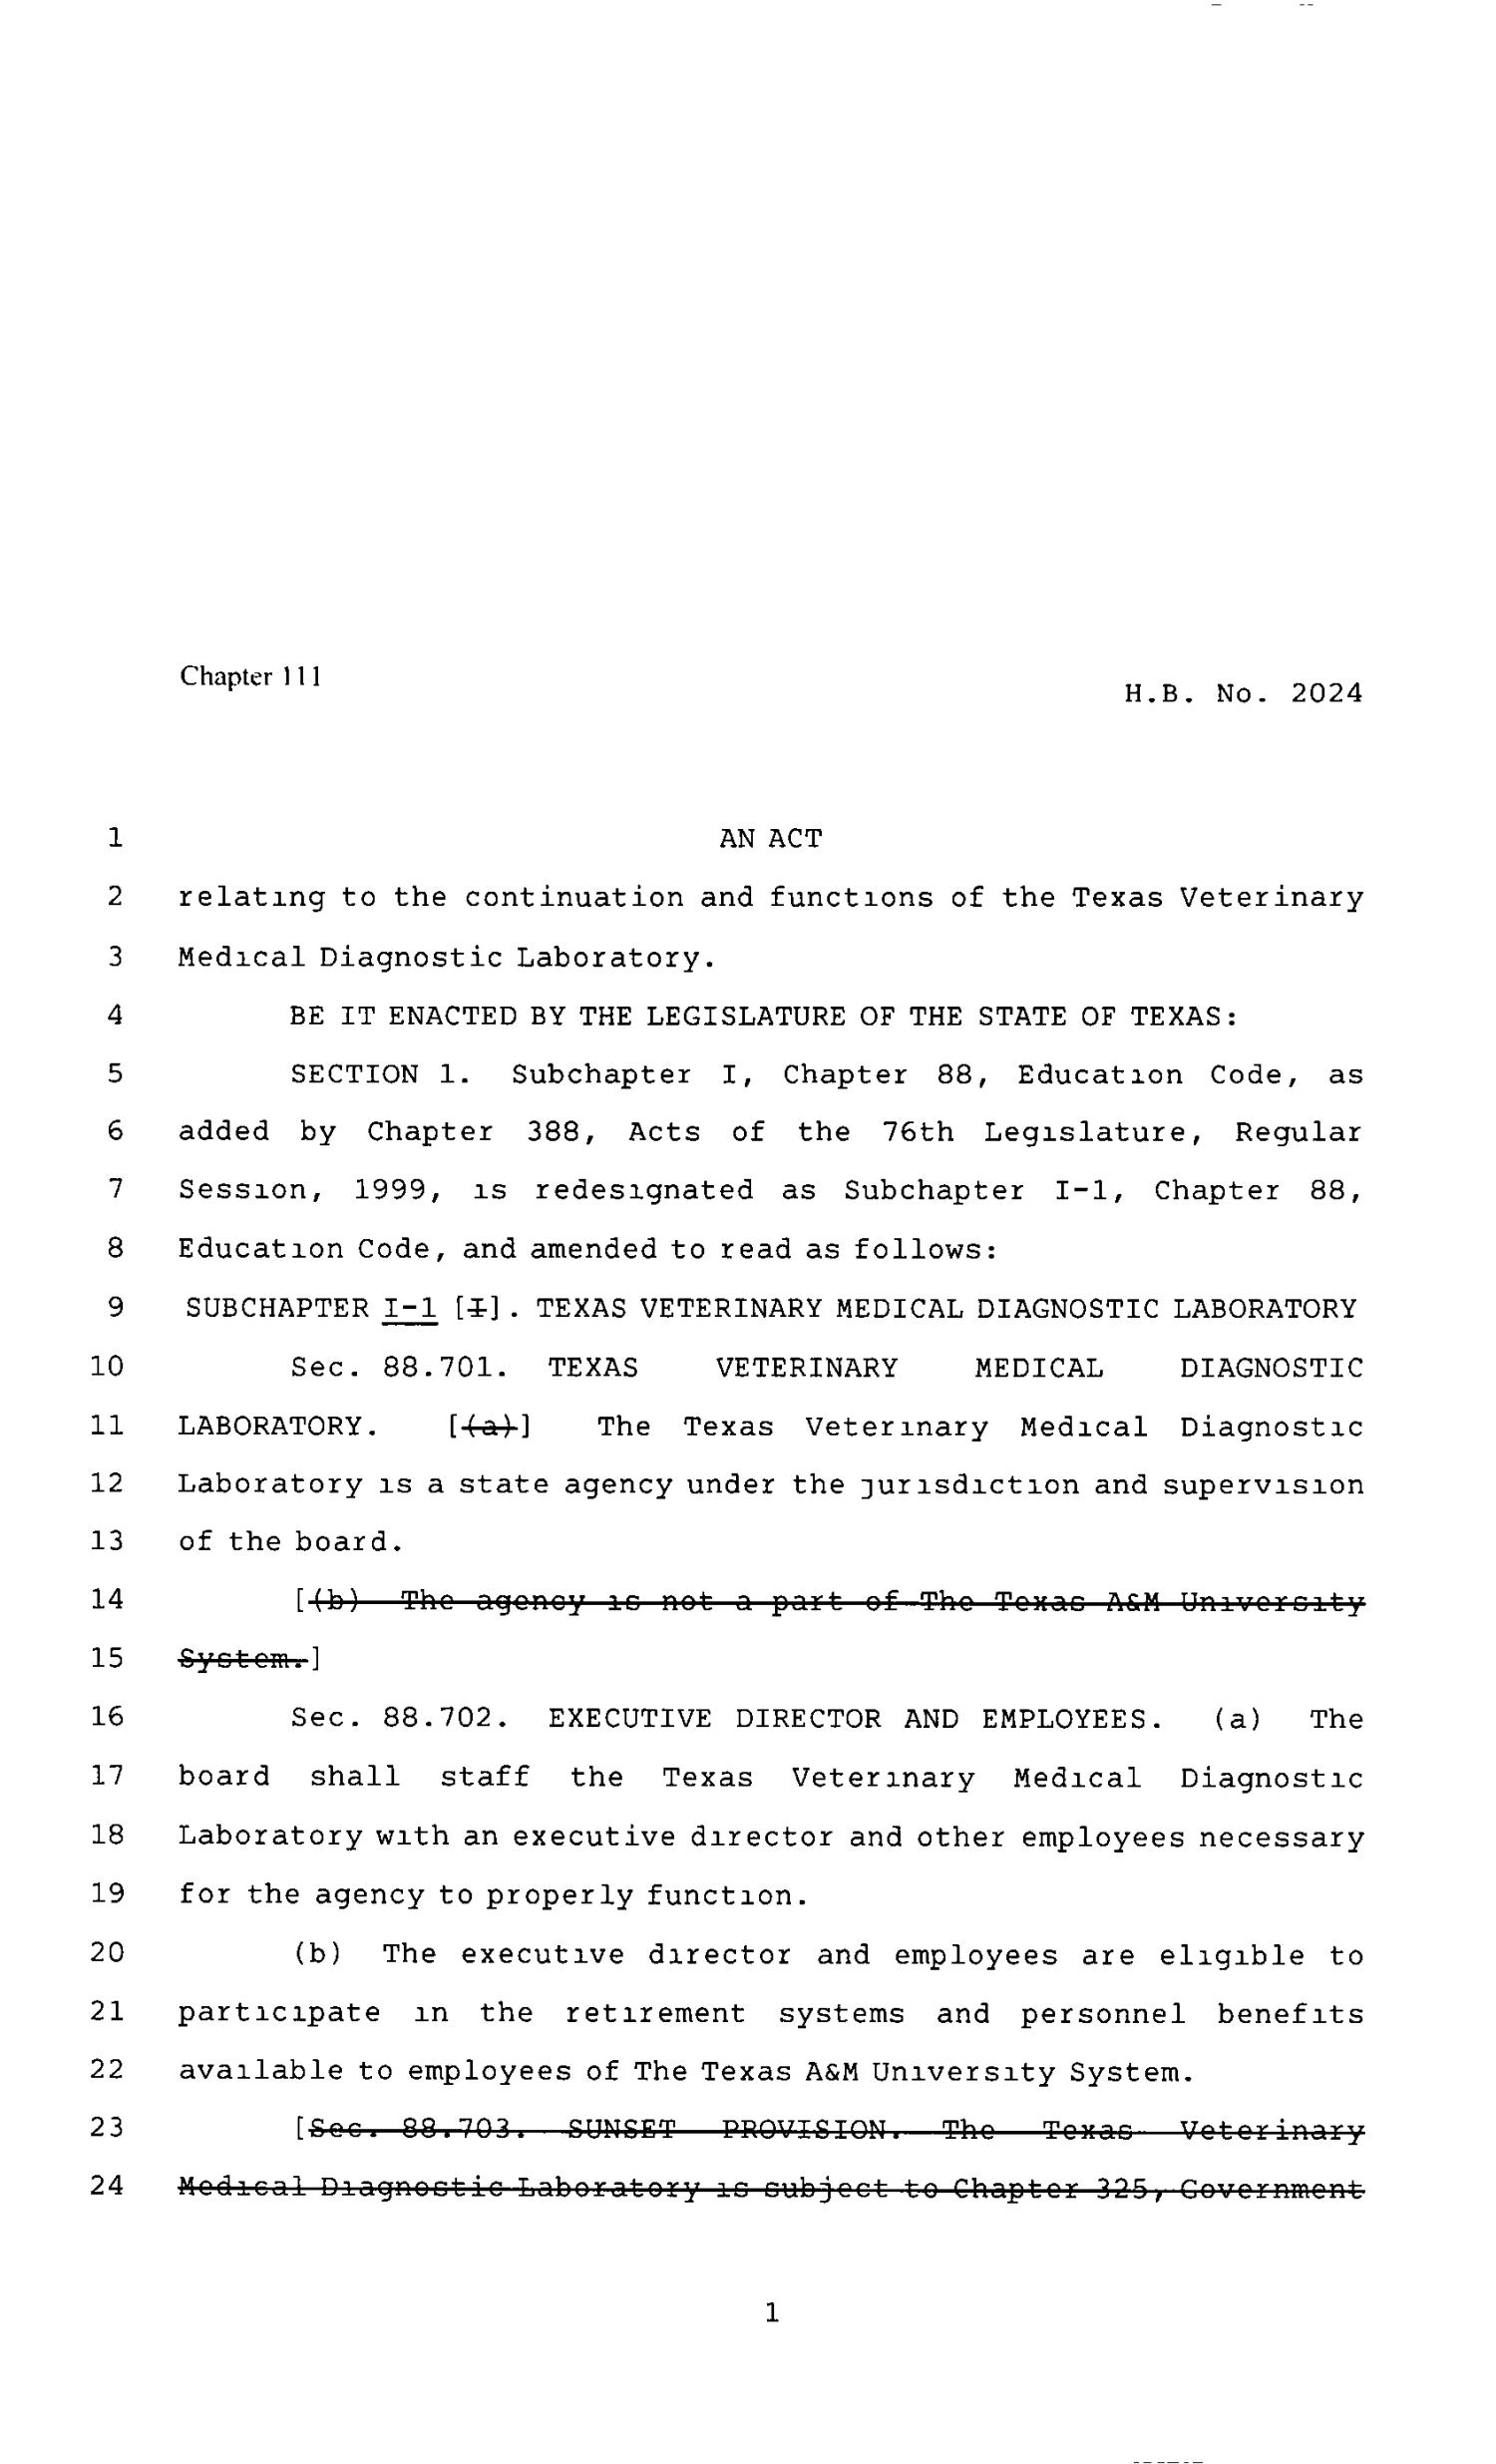 80th Texas Legislature, Regular Session, House Bill 2024, Chapter 111